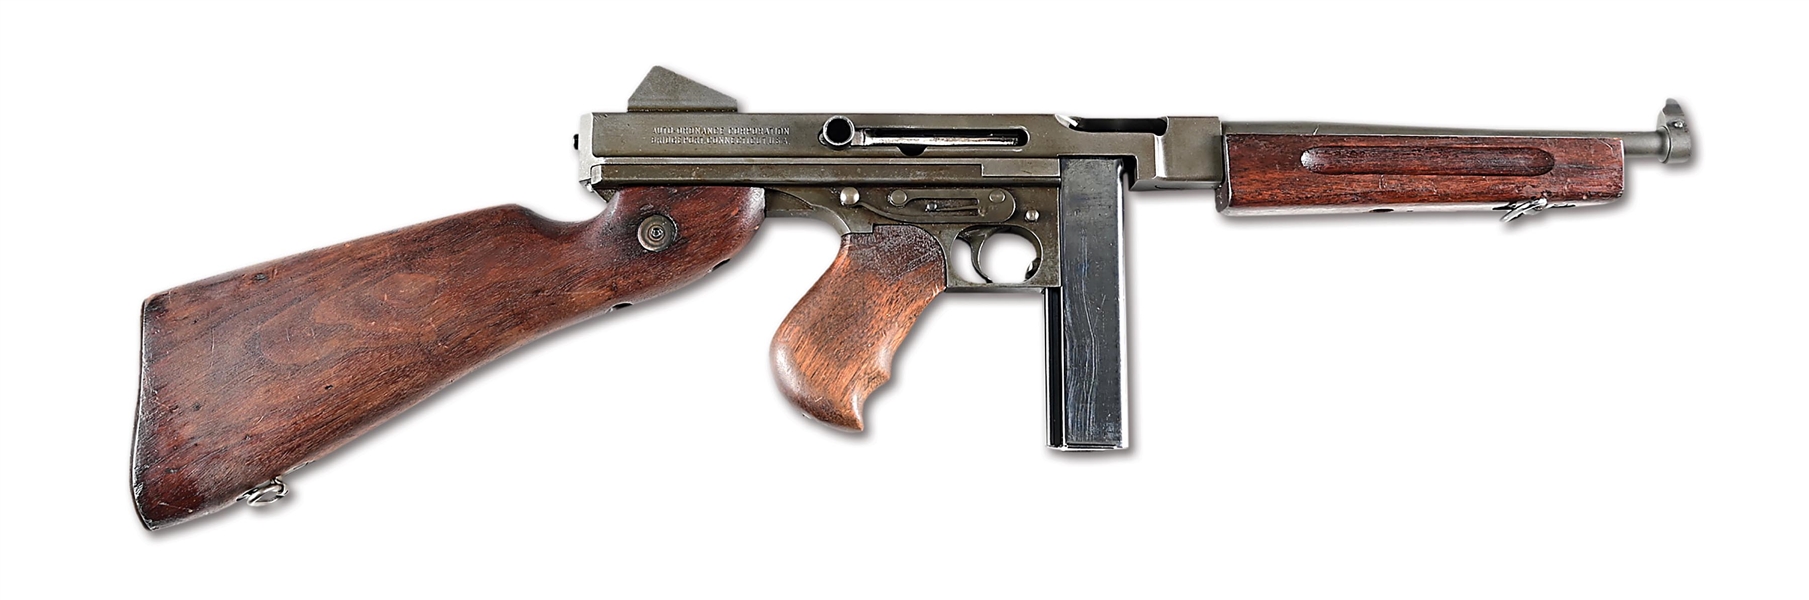 (N) SAVAGE MANUFACTURED M1 THOMPSON MACHINE GUN WITH ORIGINAL HAMMER-FIRED FIRING PIN (CURIO & RELIC).